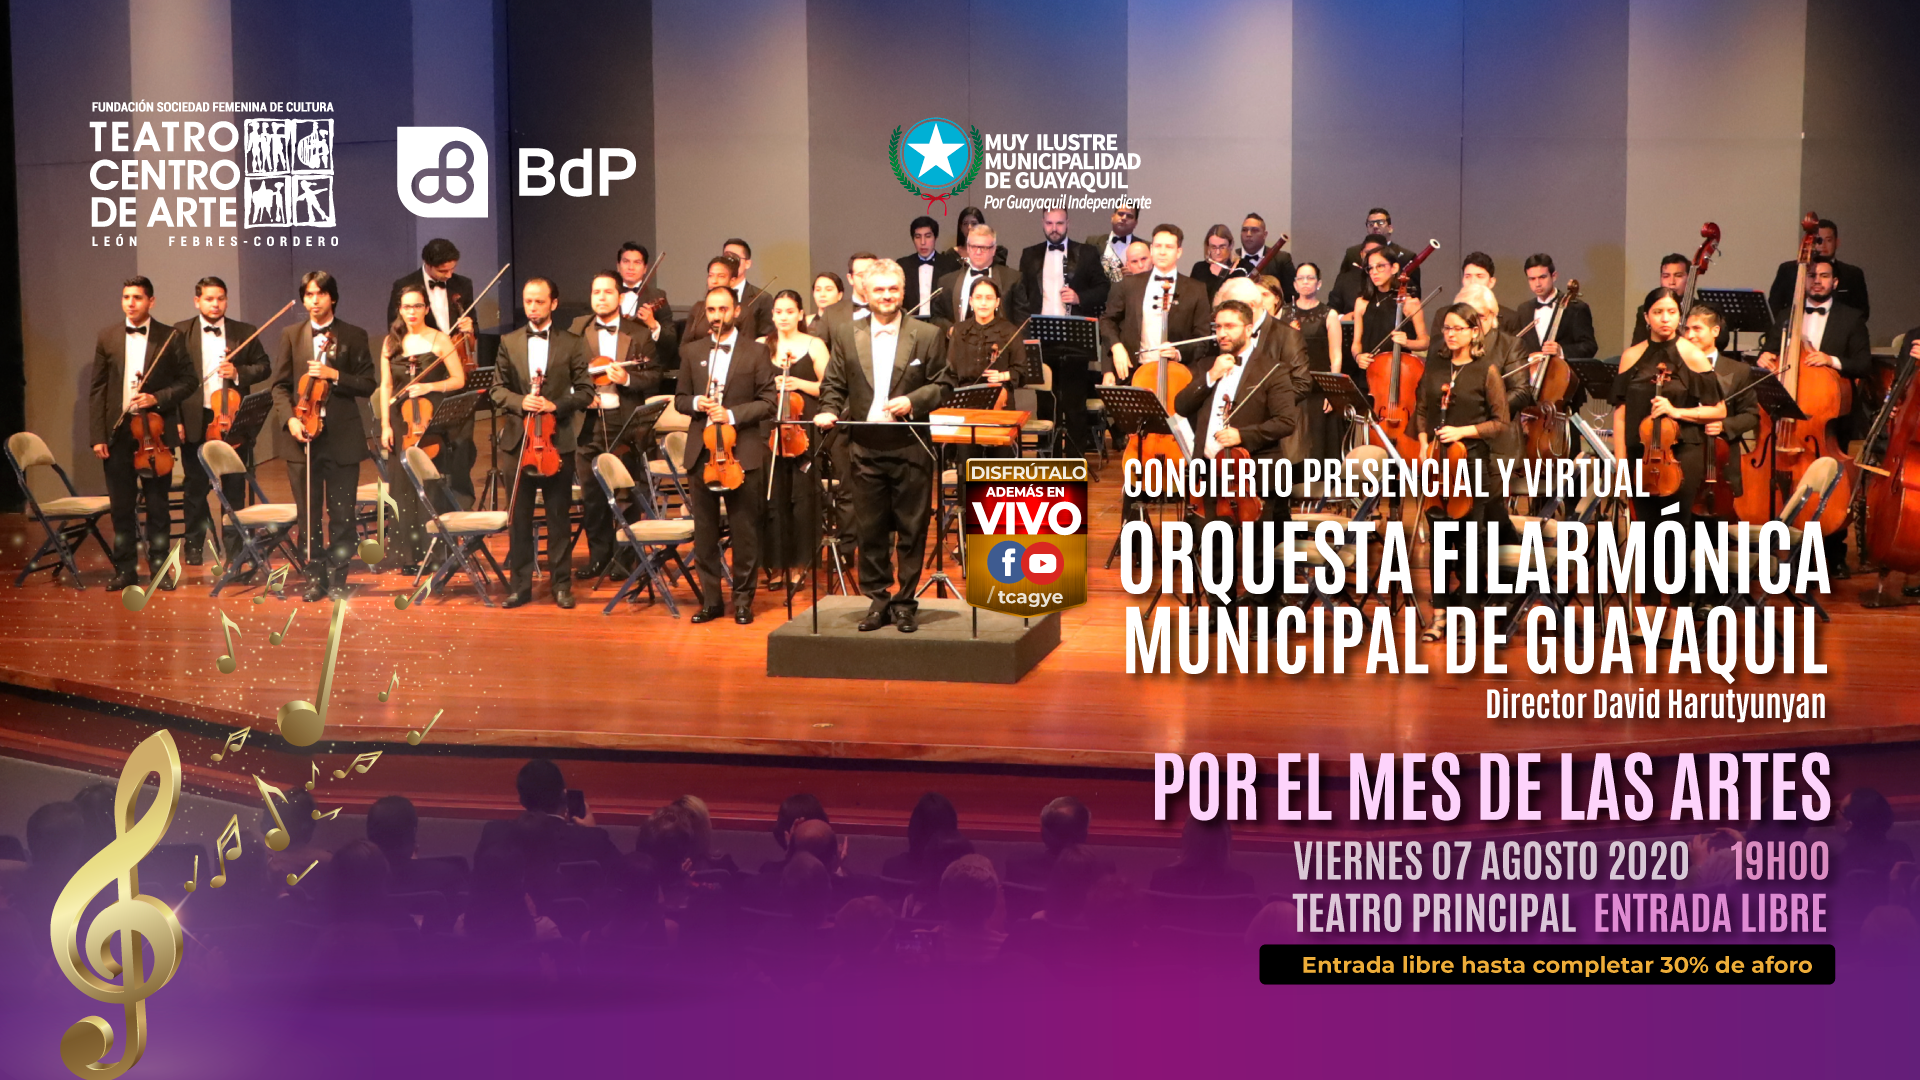 concierto-presencial-virtual-orquesta-filarmonica-municipal-guayaquil